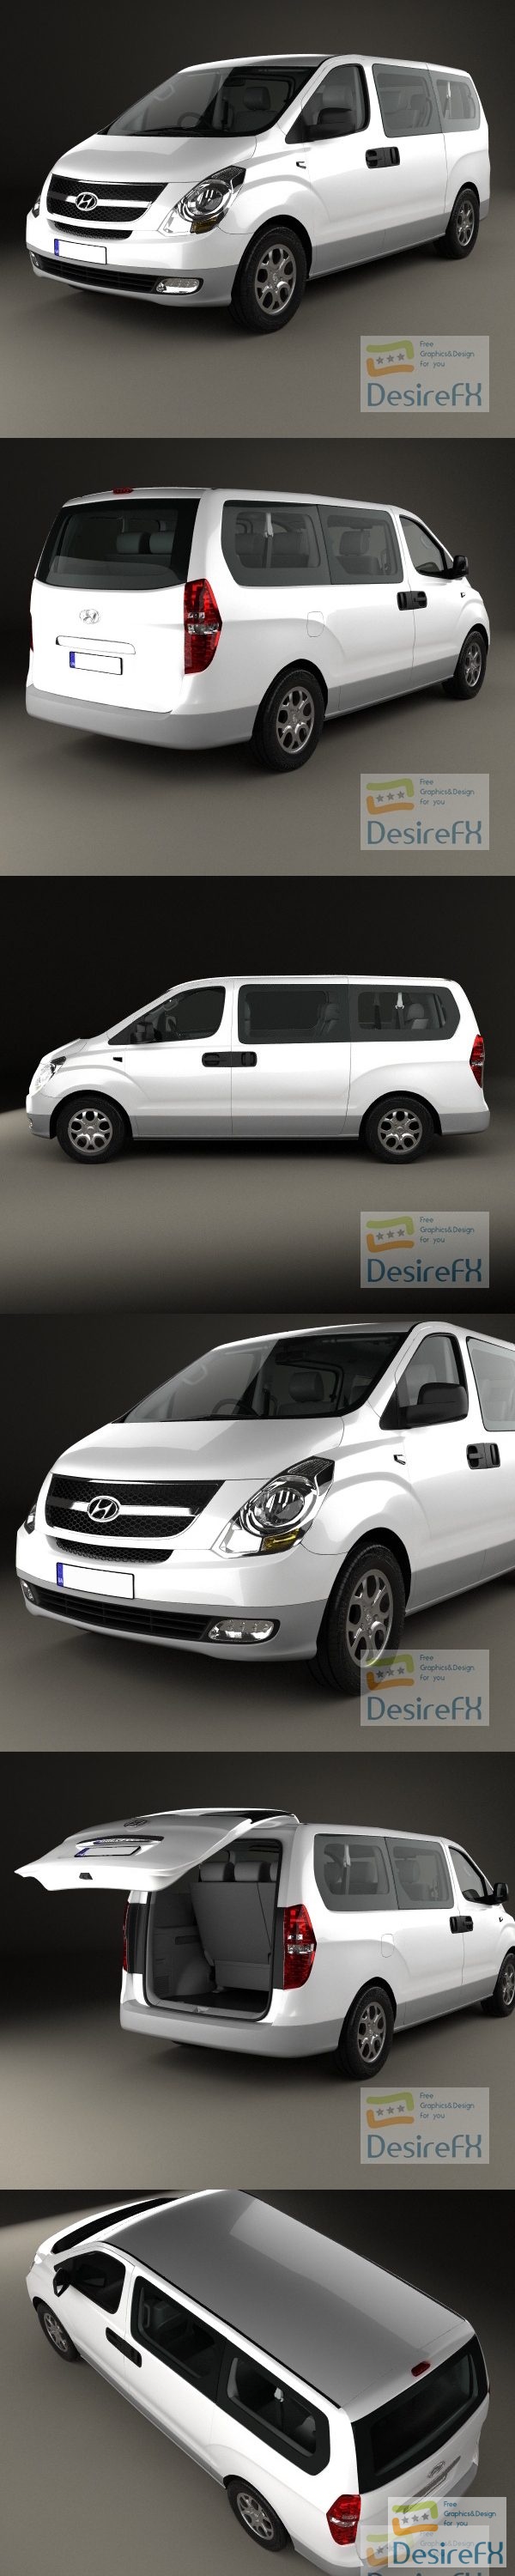 Hyundai iMax with HQ interior 2010 3D Model